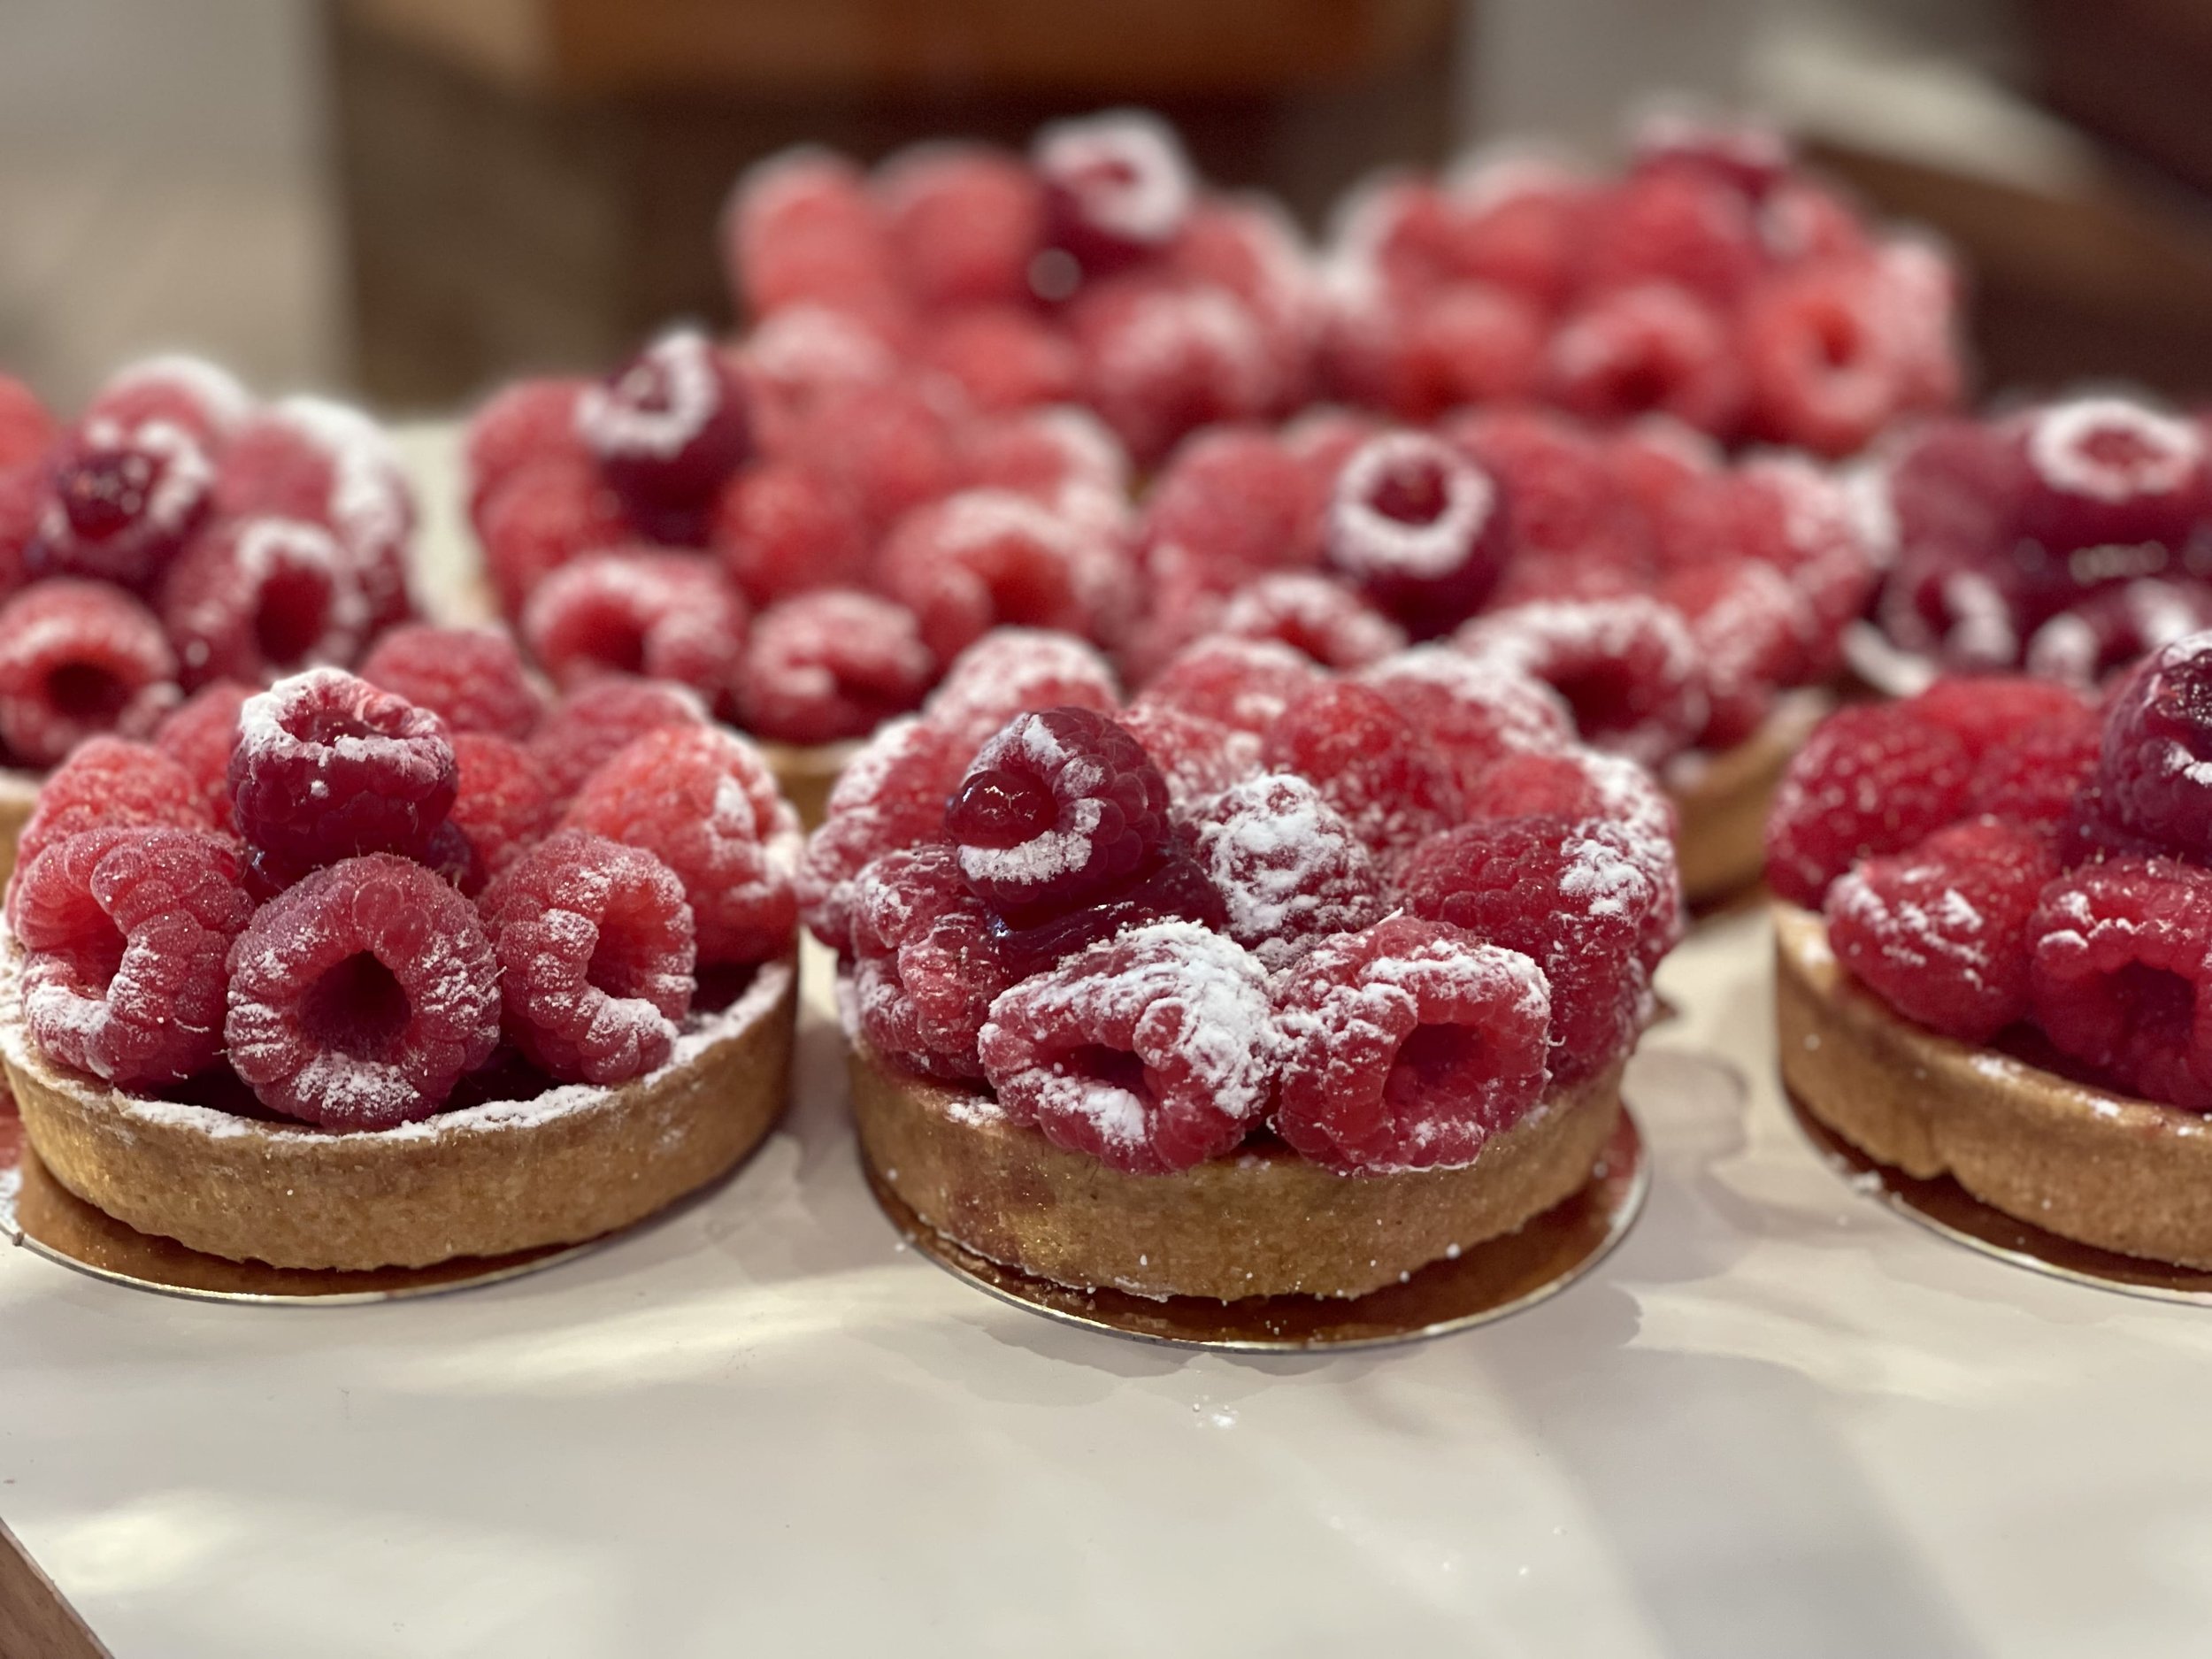 Delicious Tartes Framboises, raspberry tarts, at a Parisian  pâtisserie